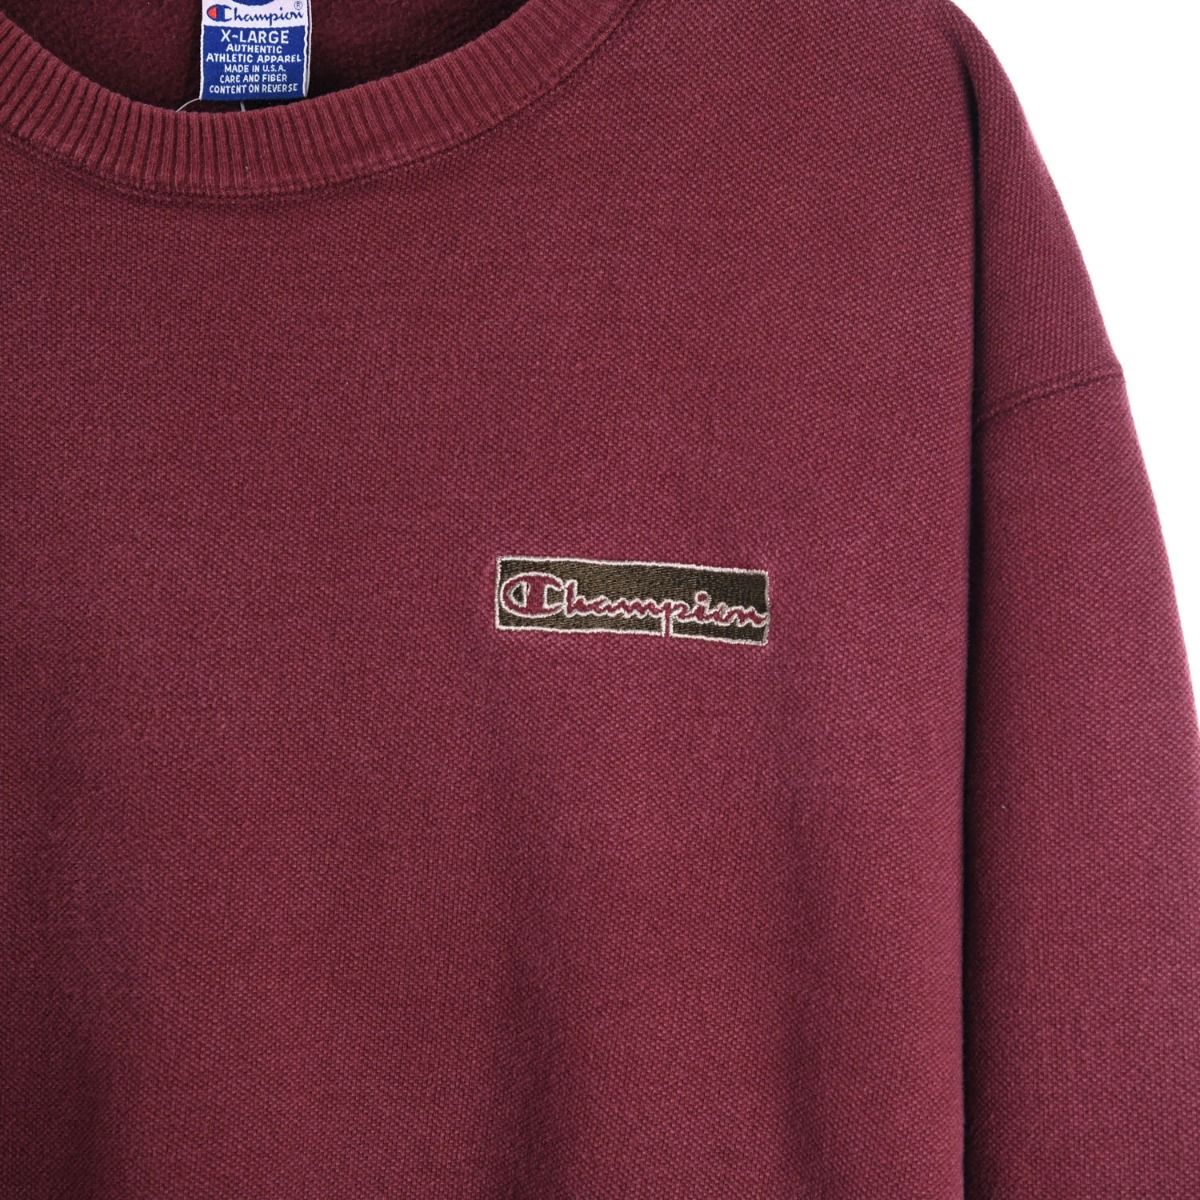 Champion 1990s Maroon Sweatshirt